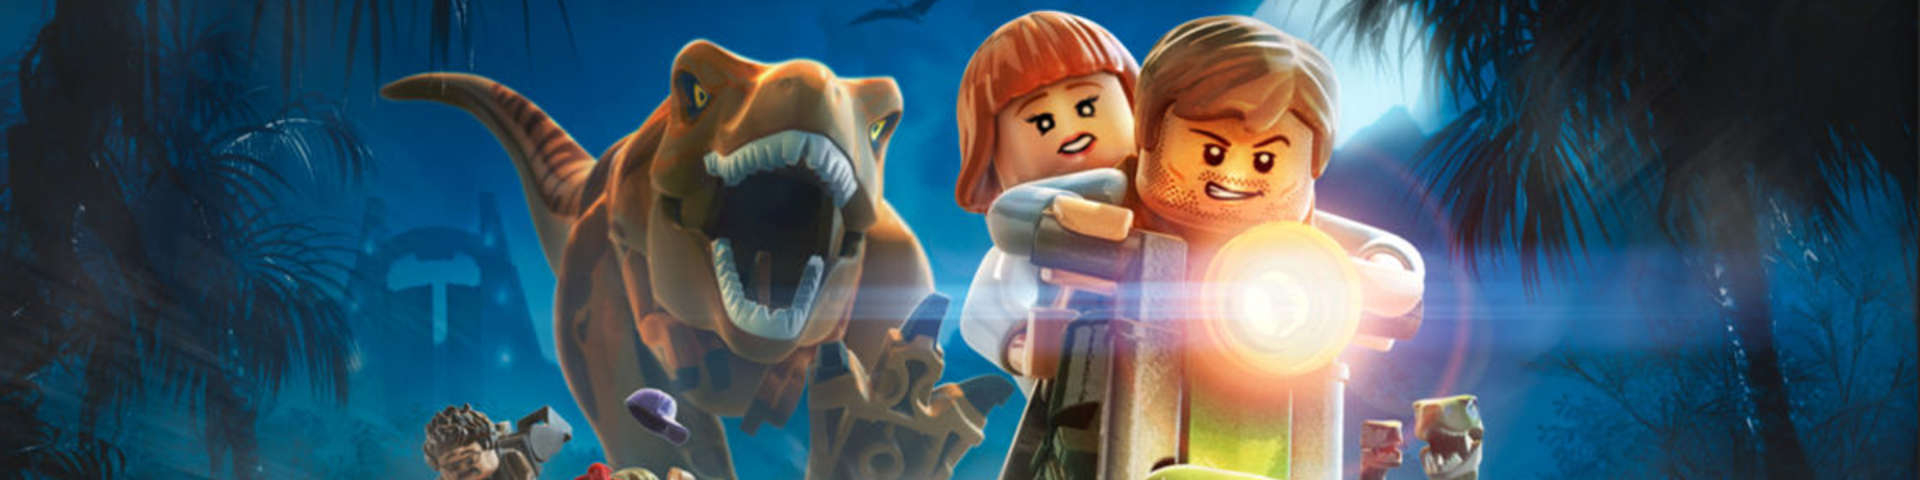 WarnerBros.com | LEGO Jurassic World | Video Games